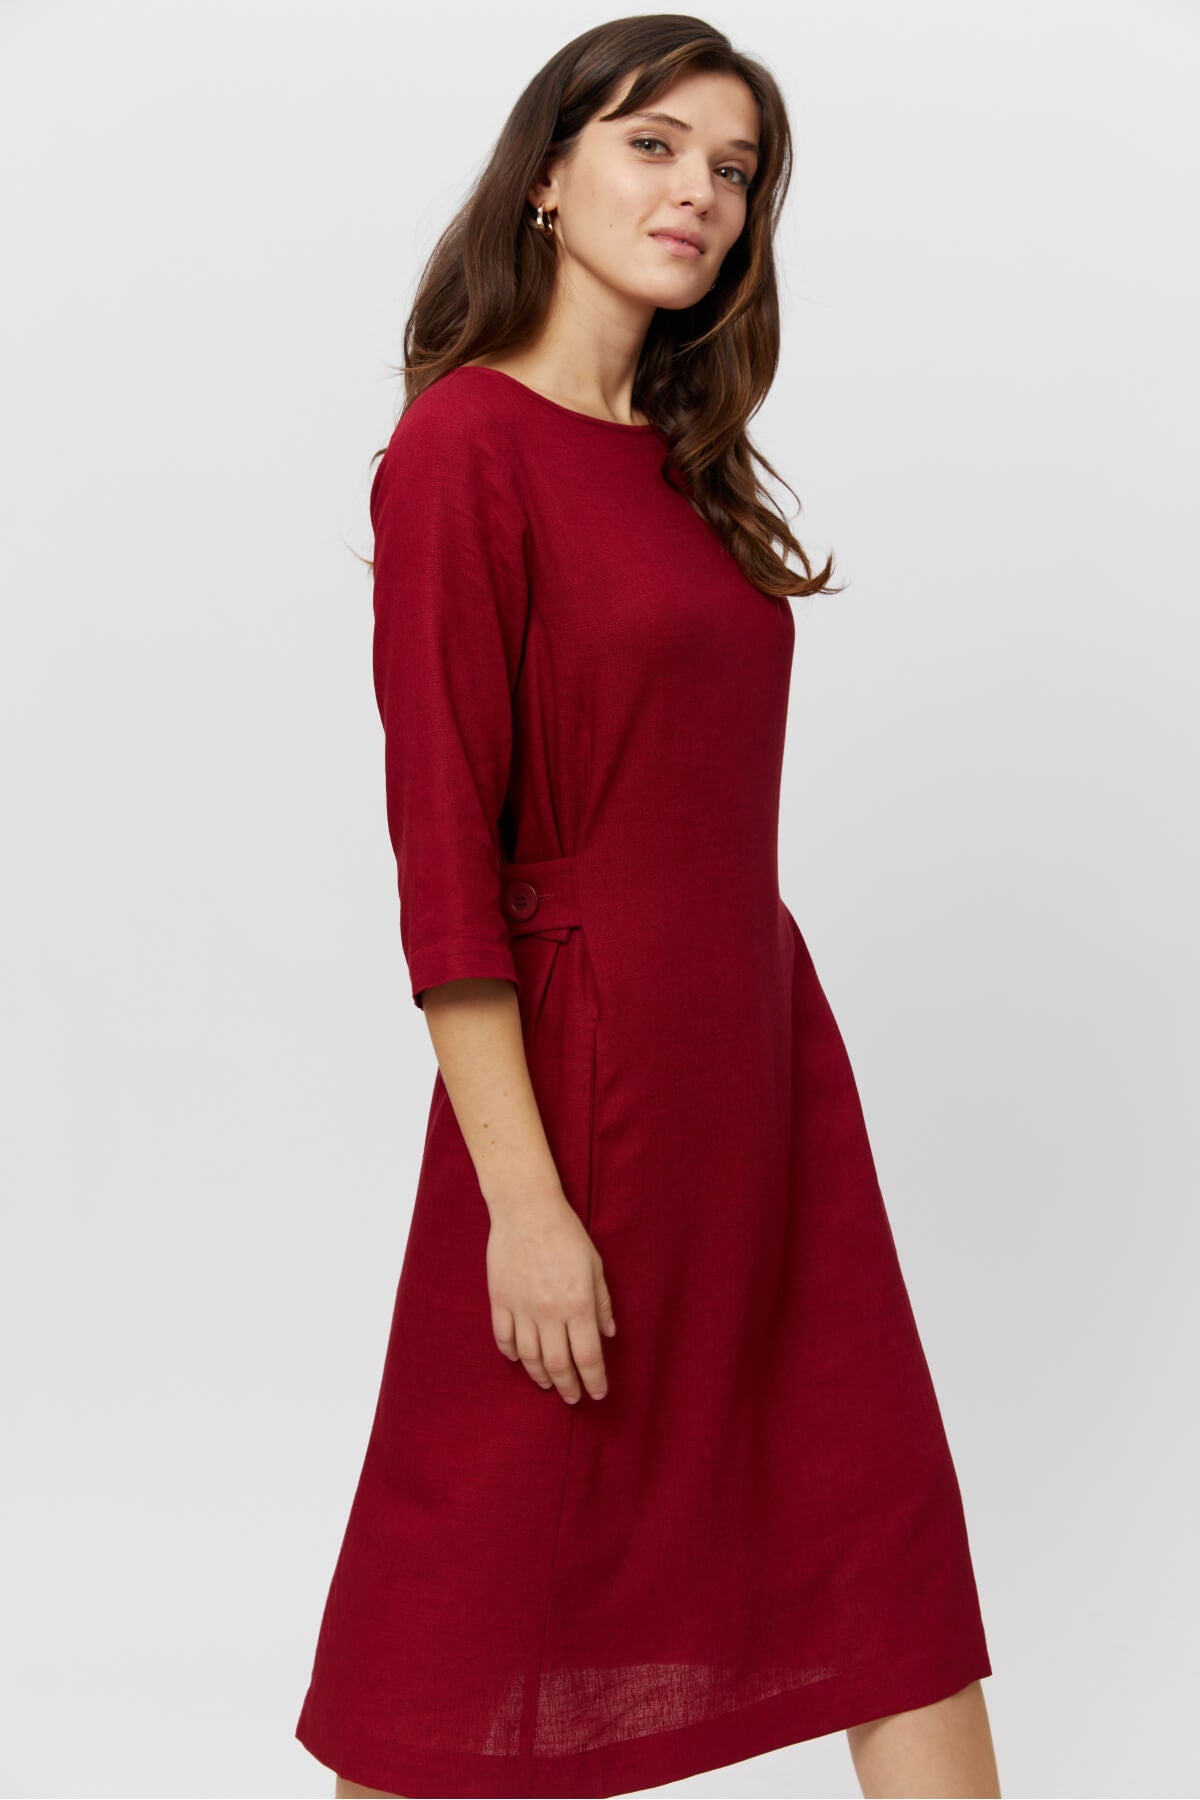 Red Emilia dress made of viscose by Ayani